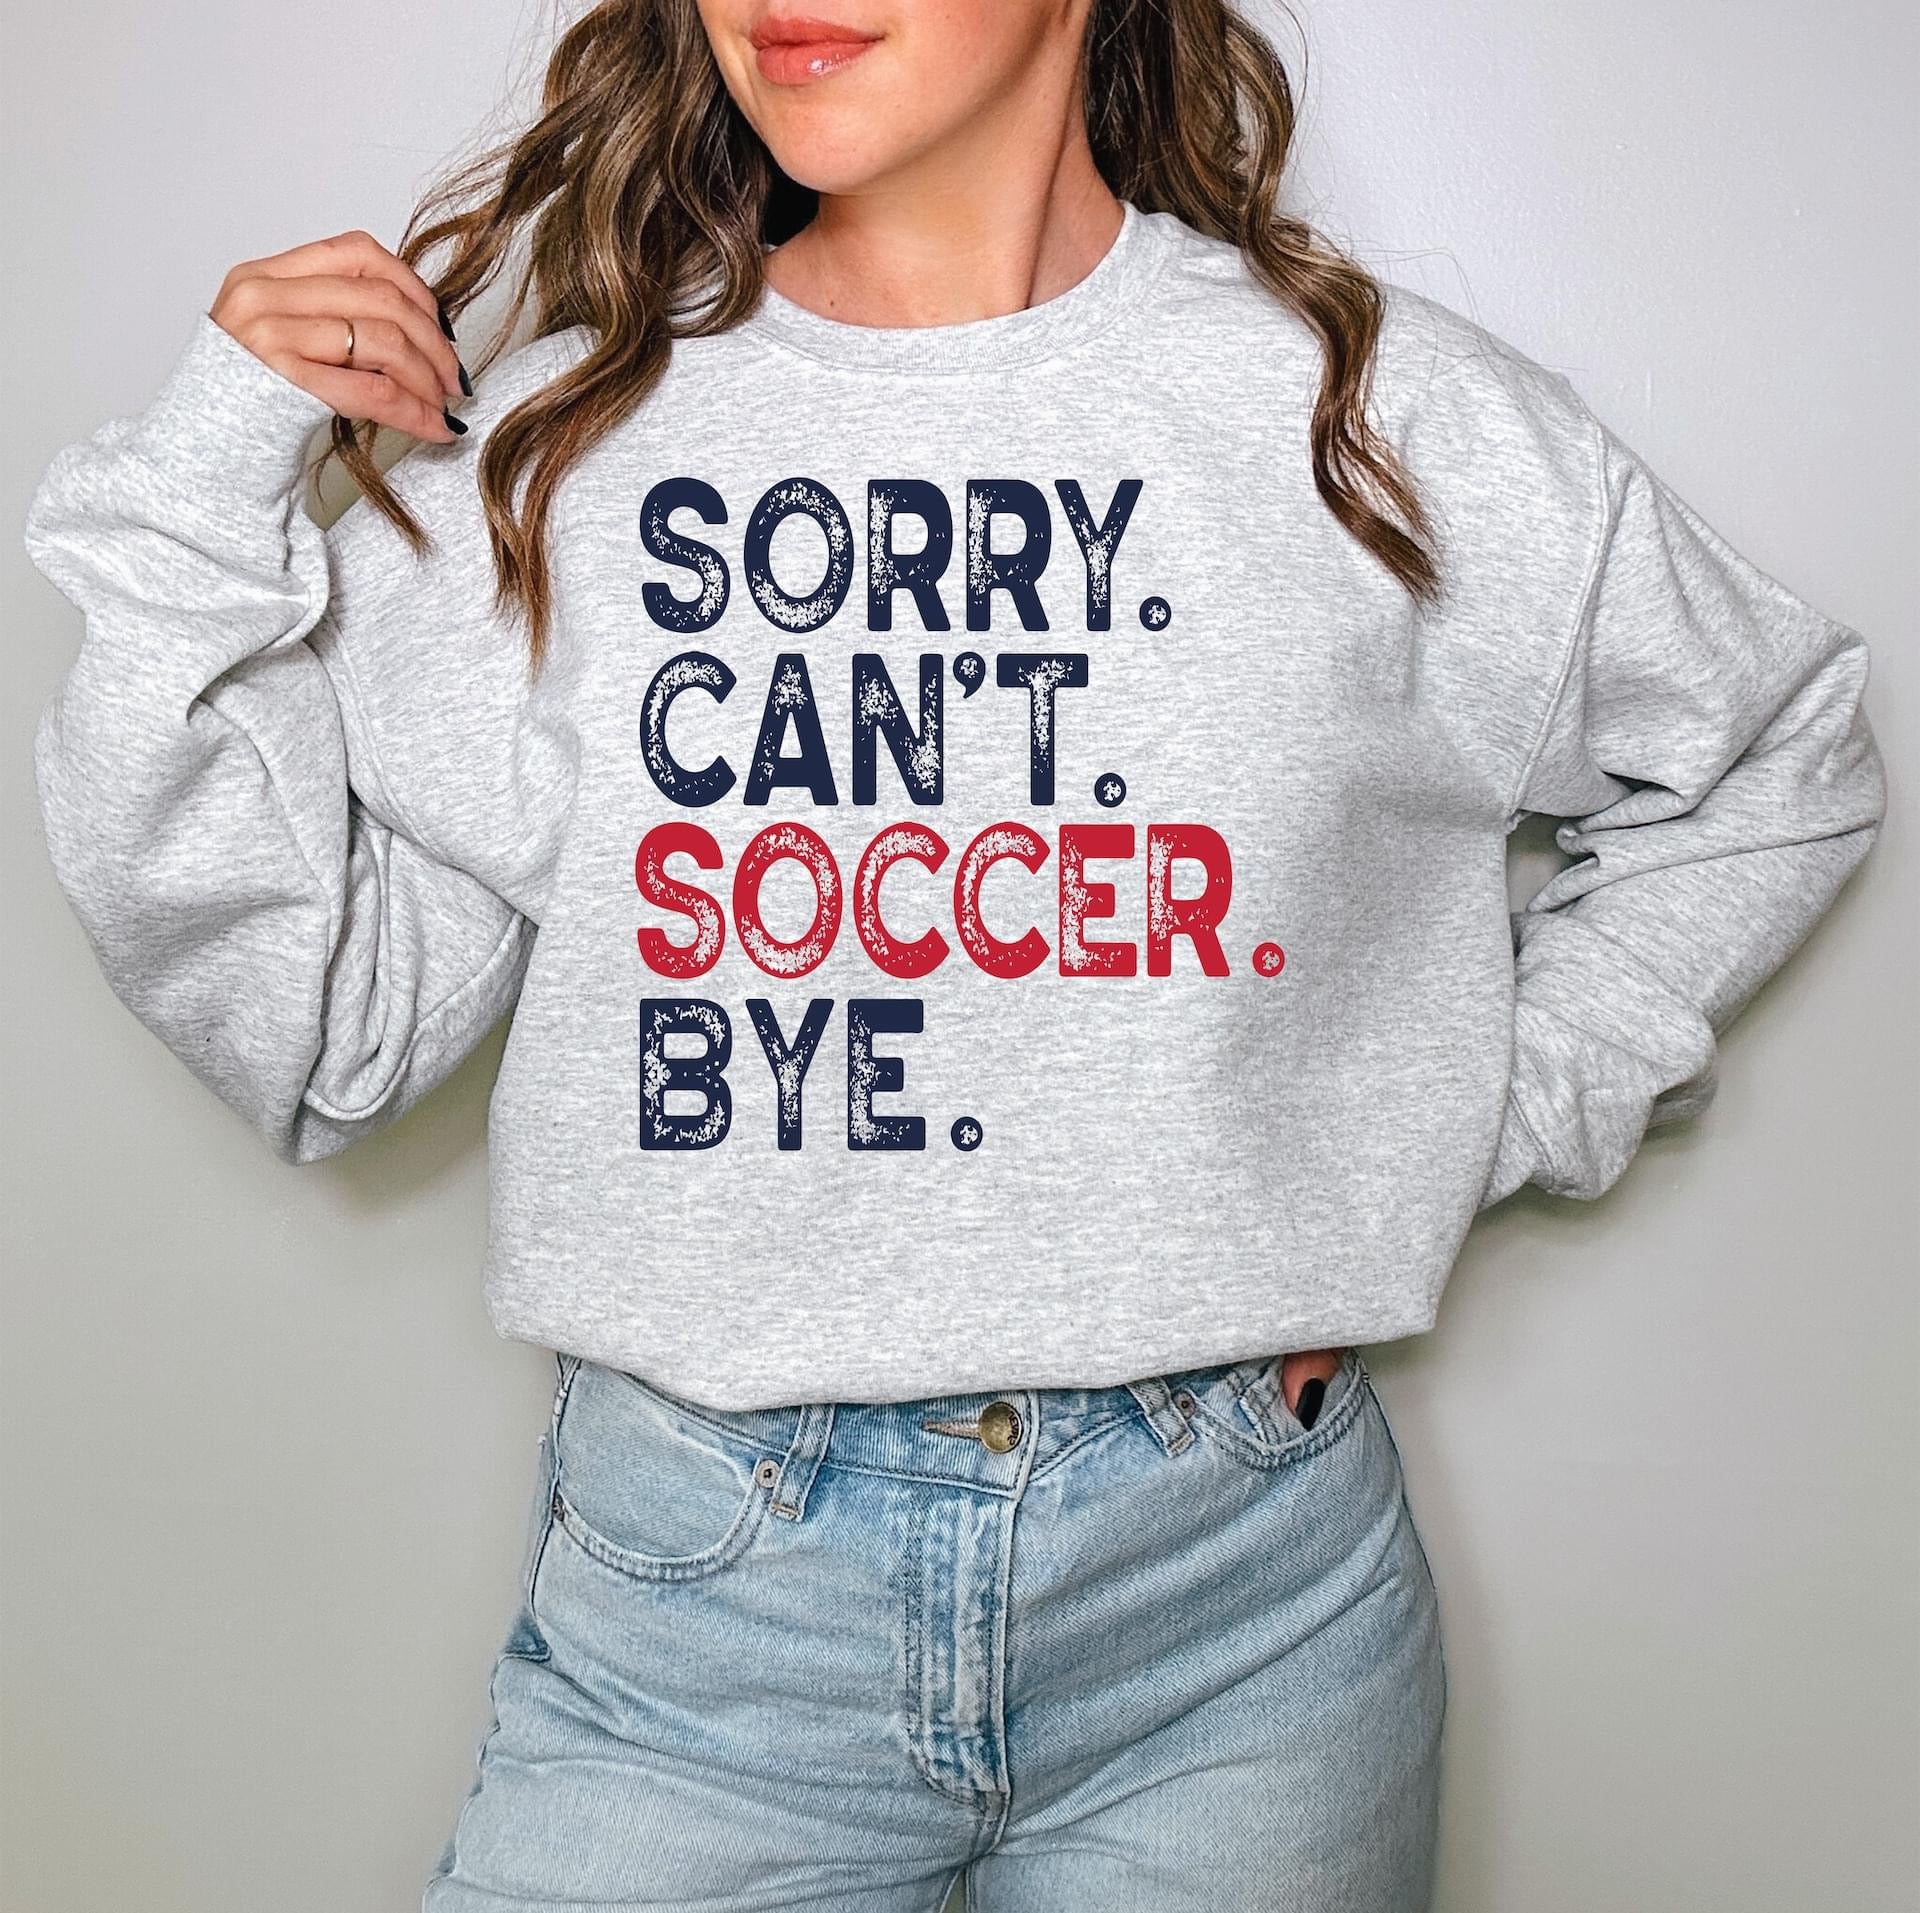 Sorry. Can’t. Soccer. Bye TEE OR SWEATSHIRT